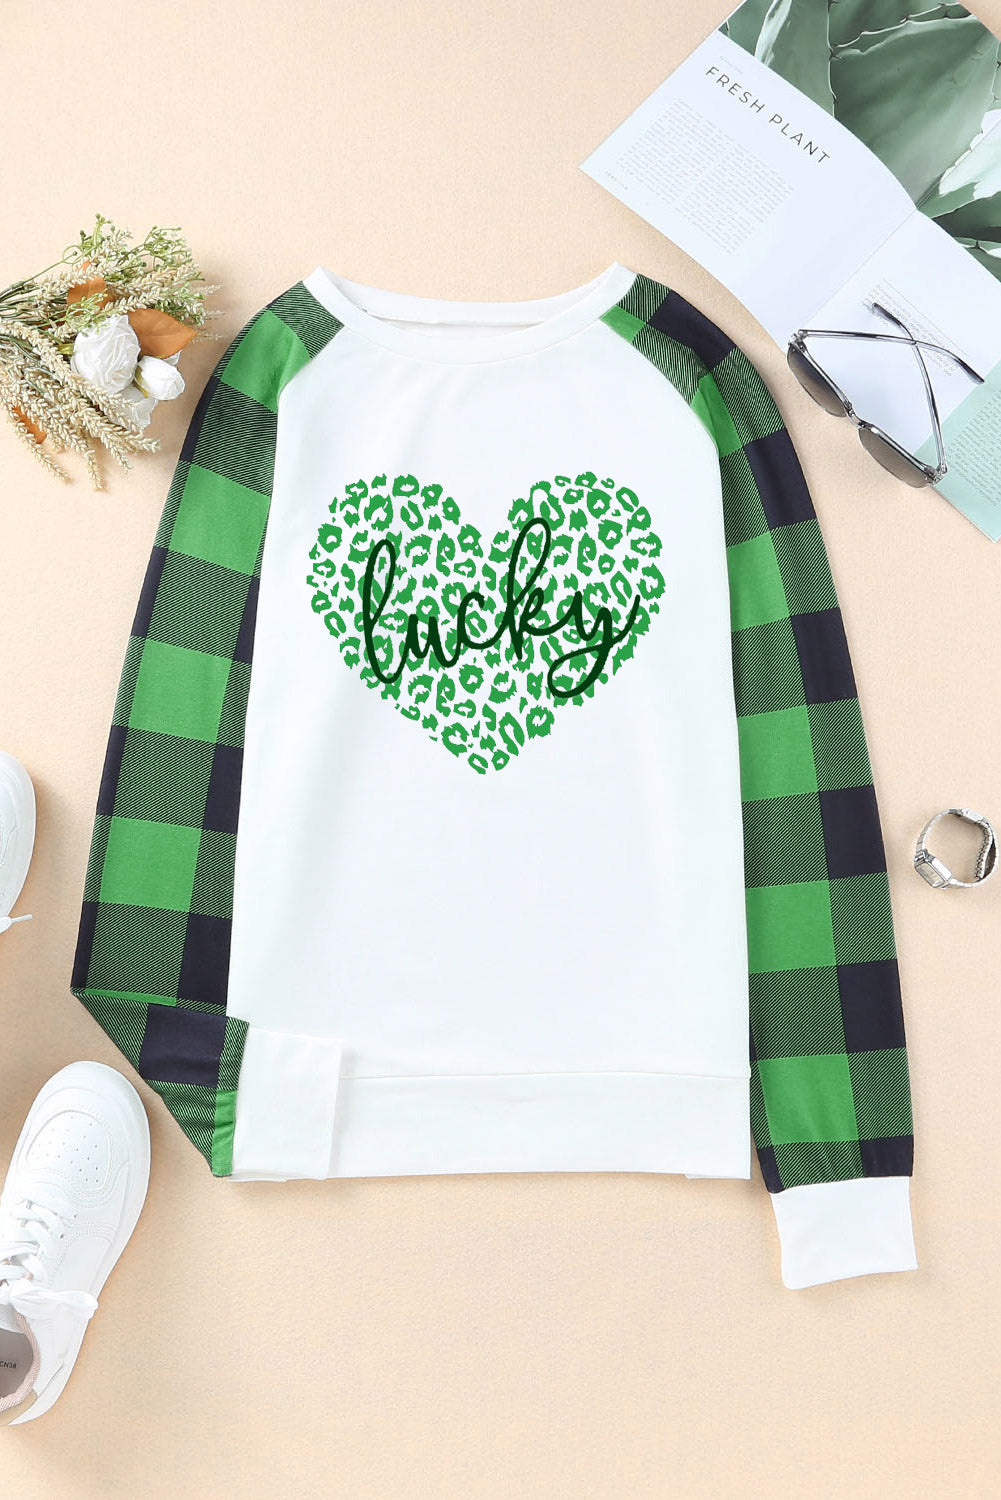 Green Lucky Heart Pattern Leopard & Buffalo Plaid Sweatshirt Graphic Sweatshirts JT's Designer Fashion